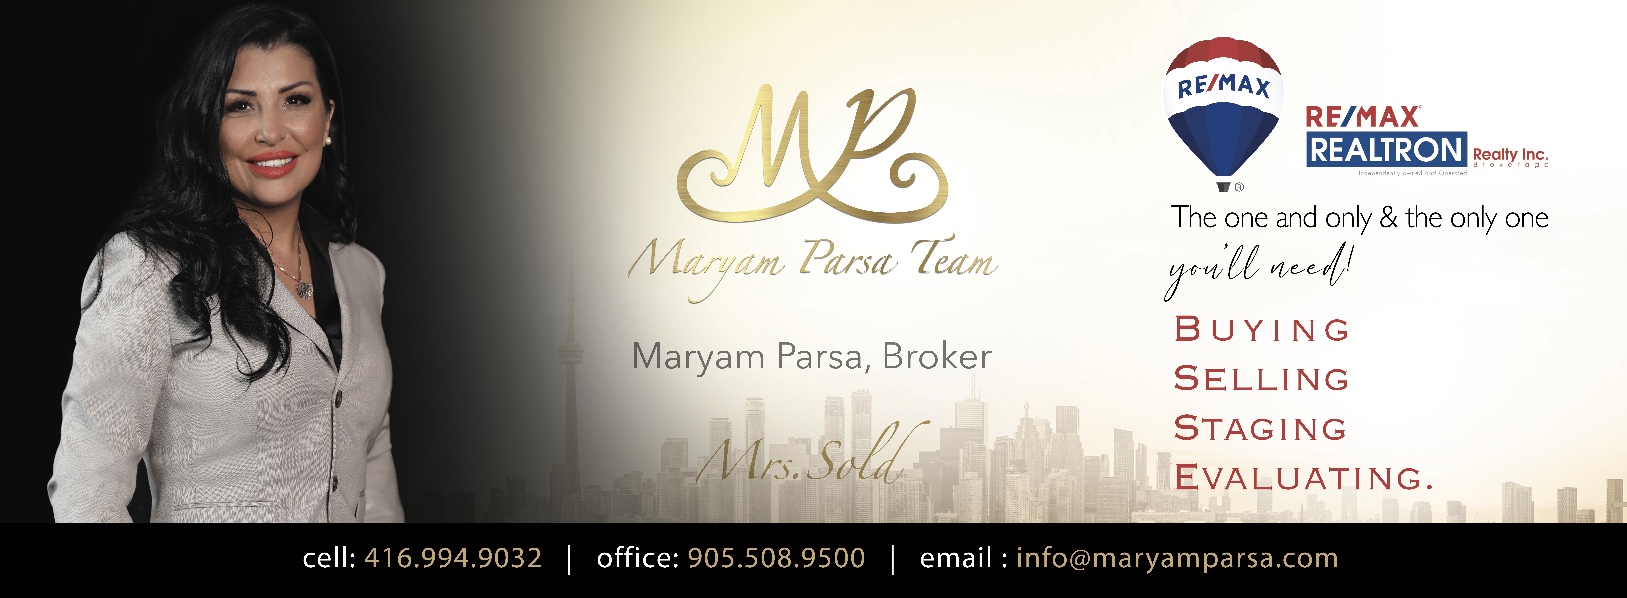 Maryam Parsa broker